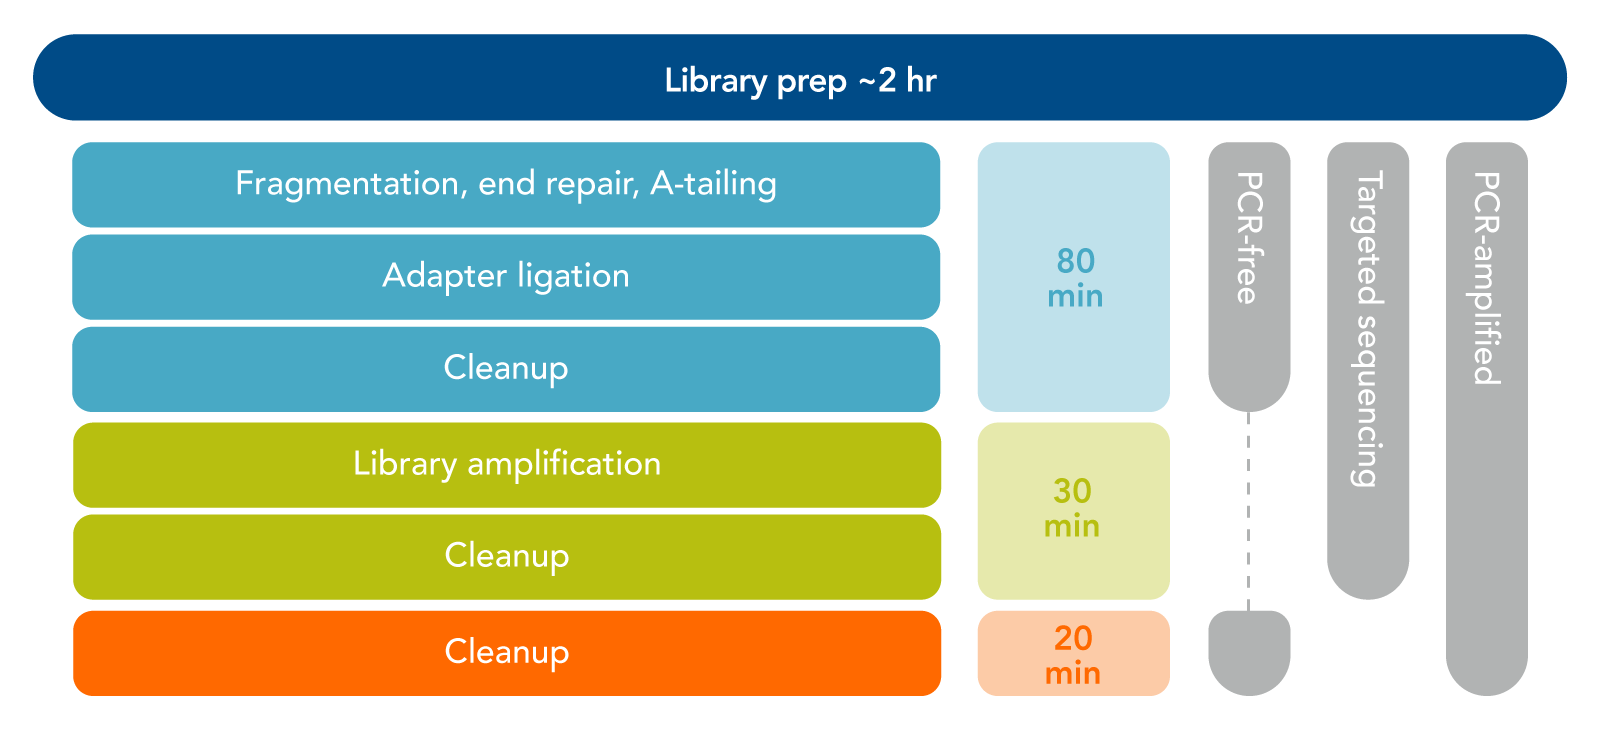 Lotus library prep: time & main steps